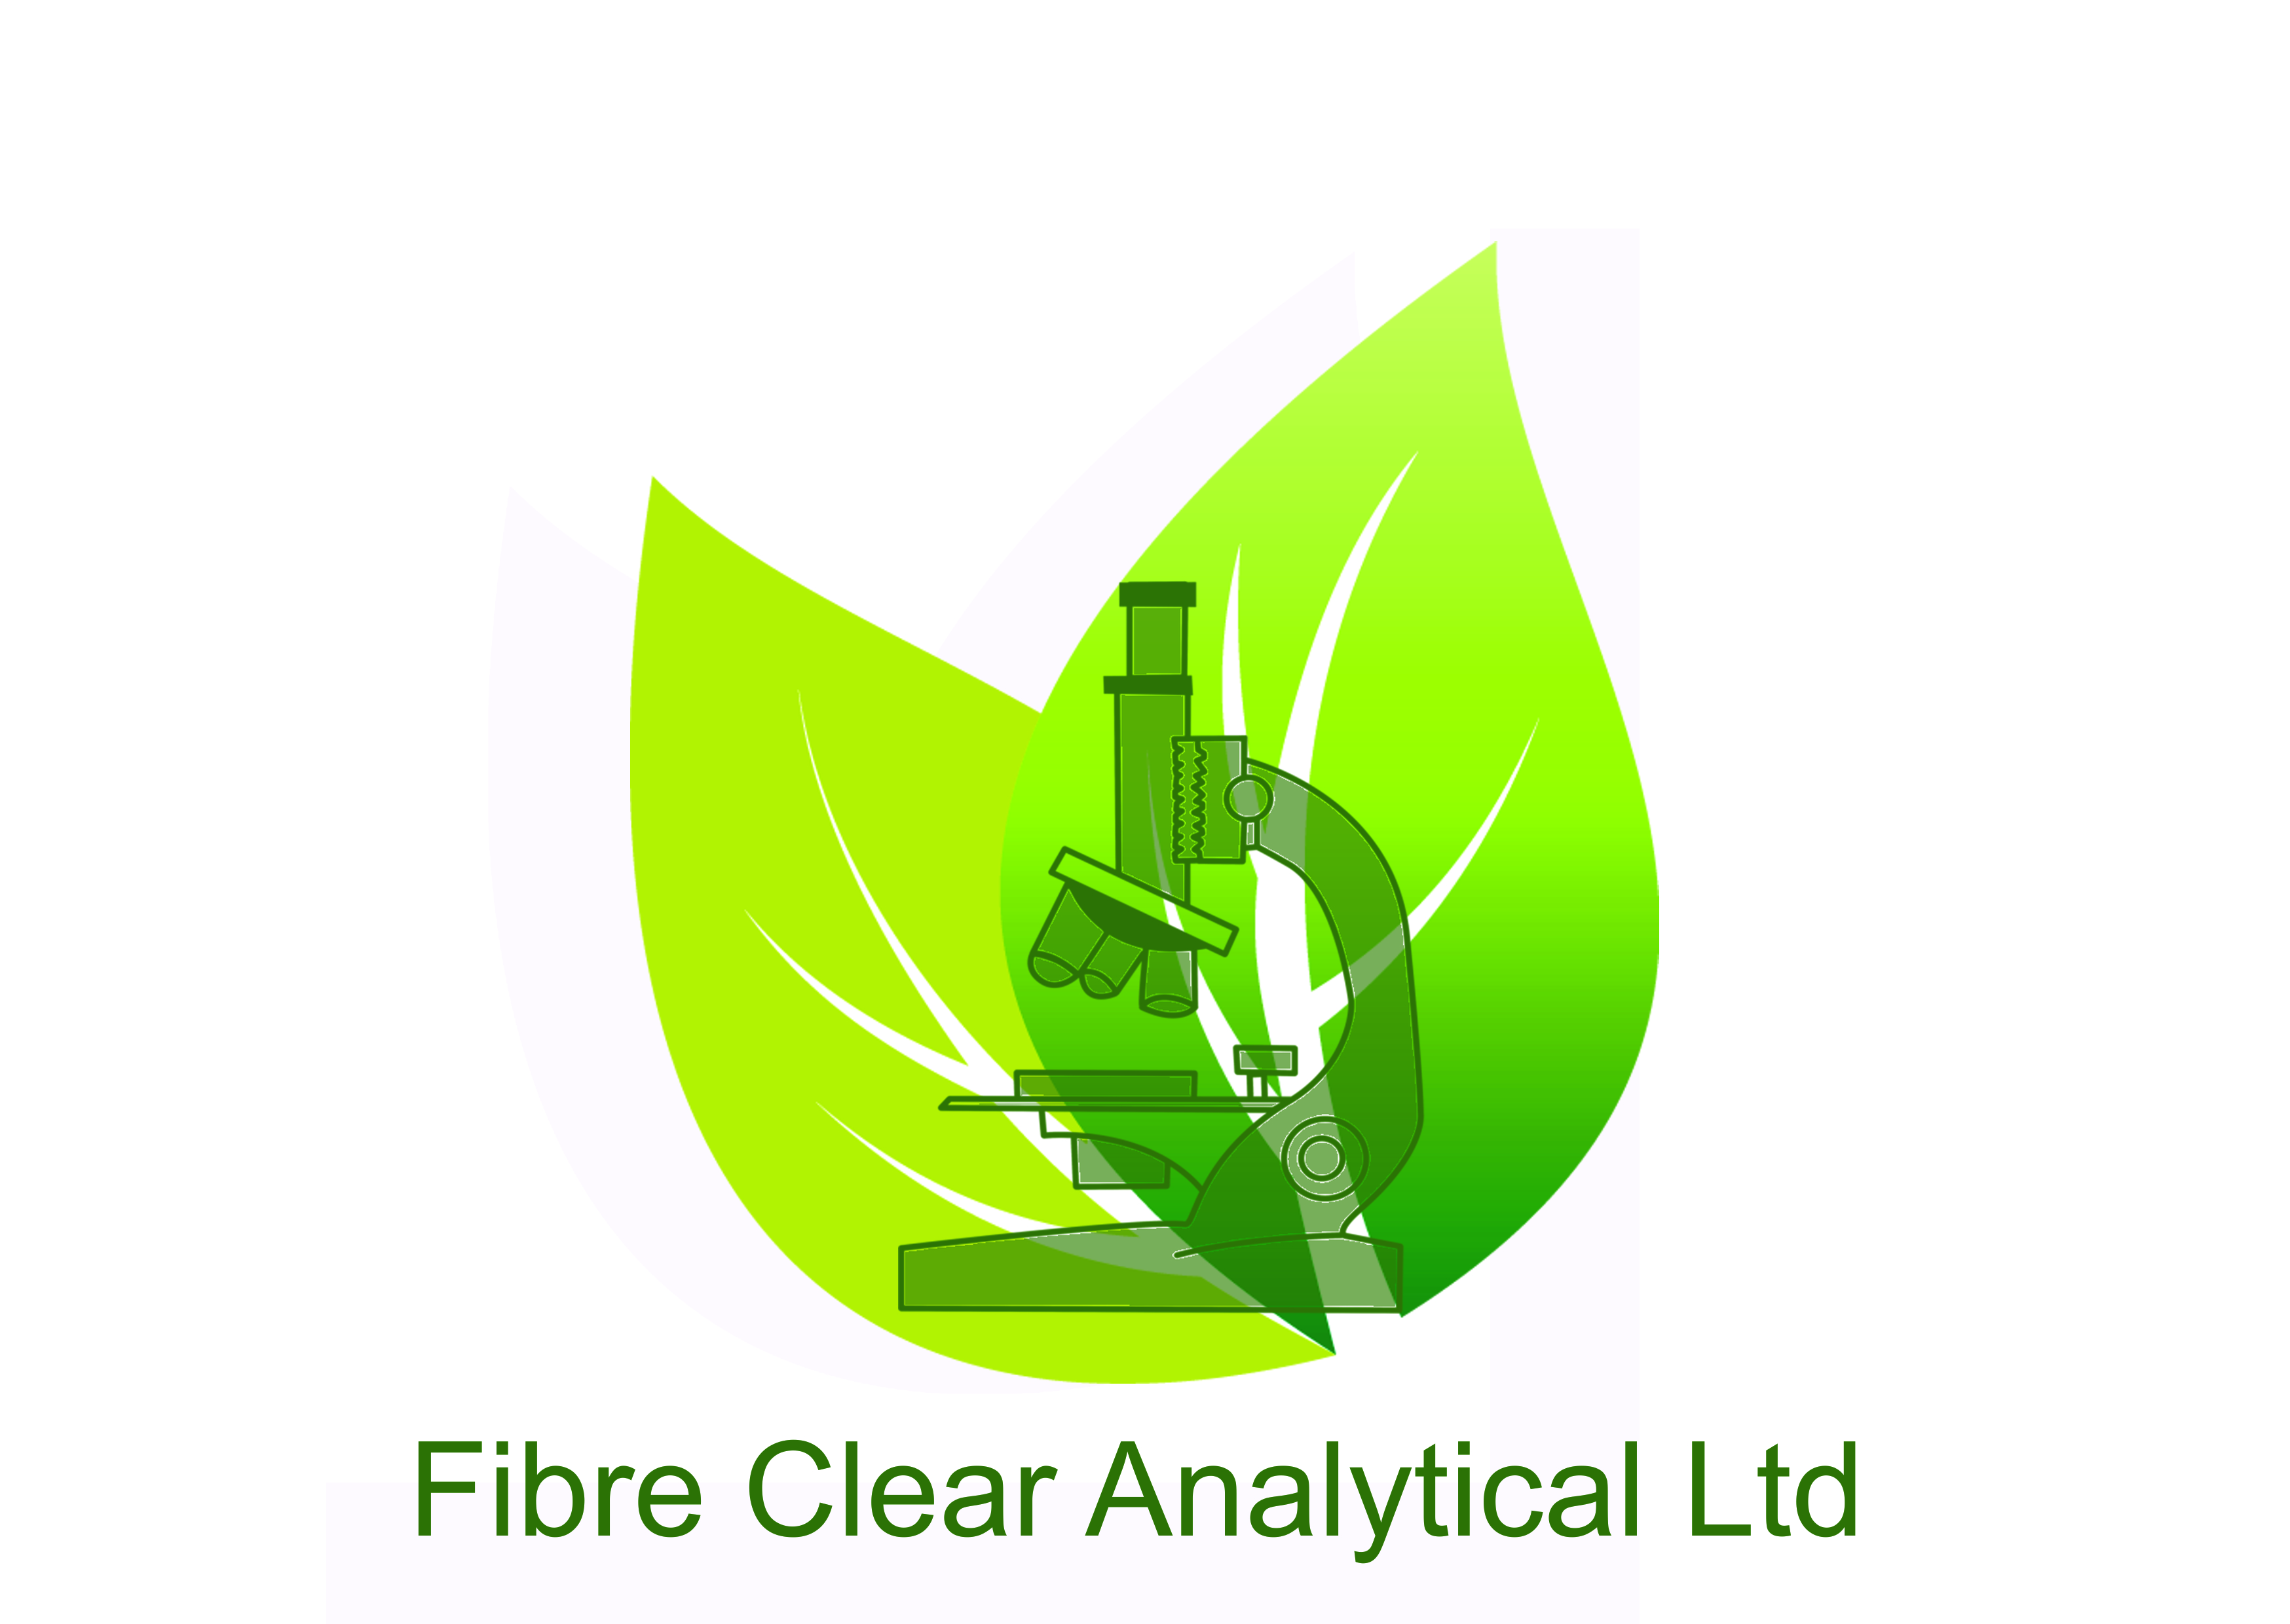 Fibre Clear Analytical Ltd